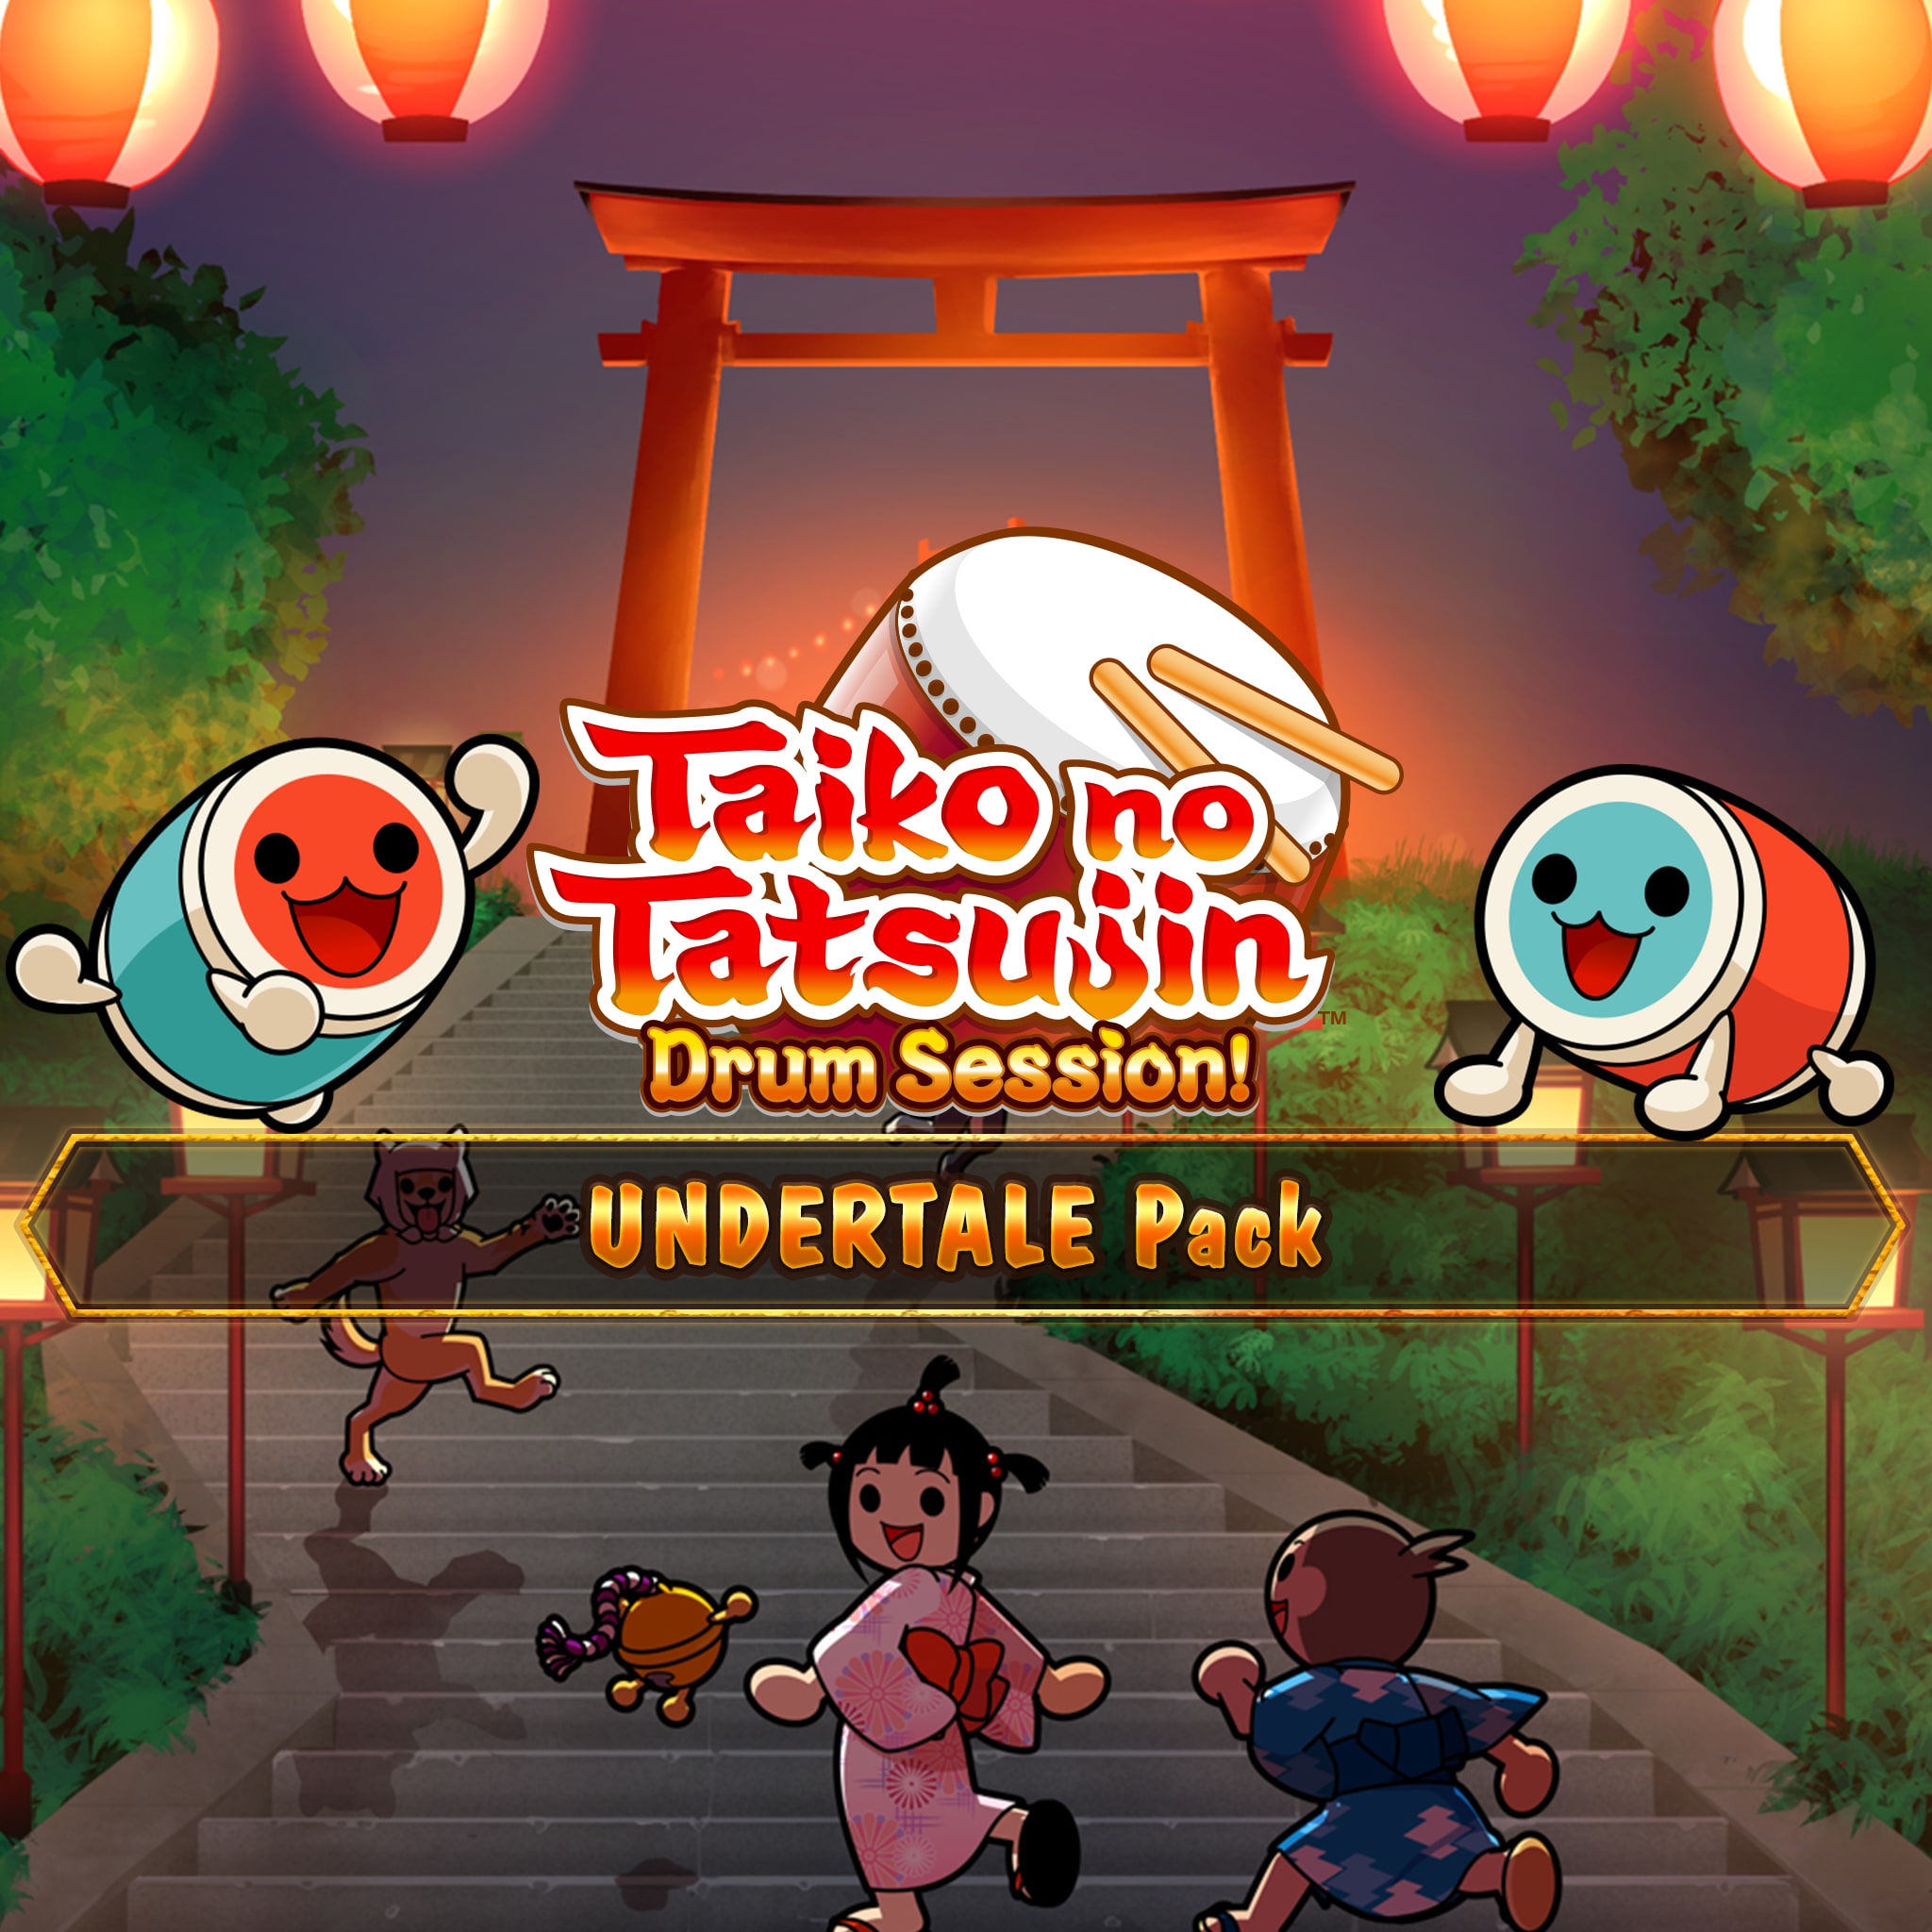 Taiko no Tatsujin - UNDERTALE Pack